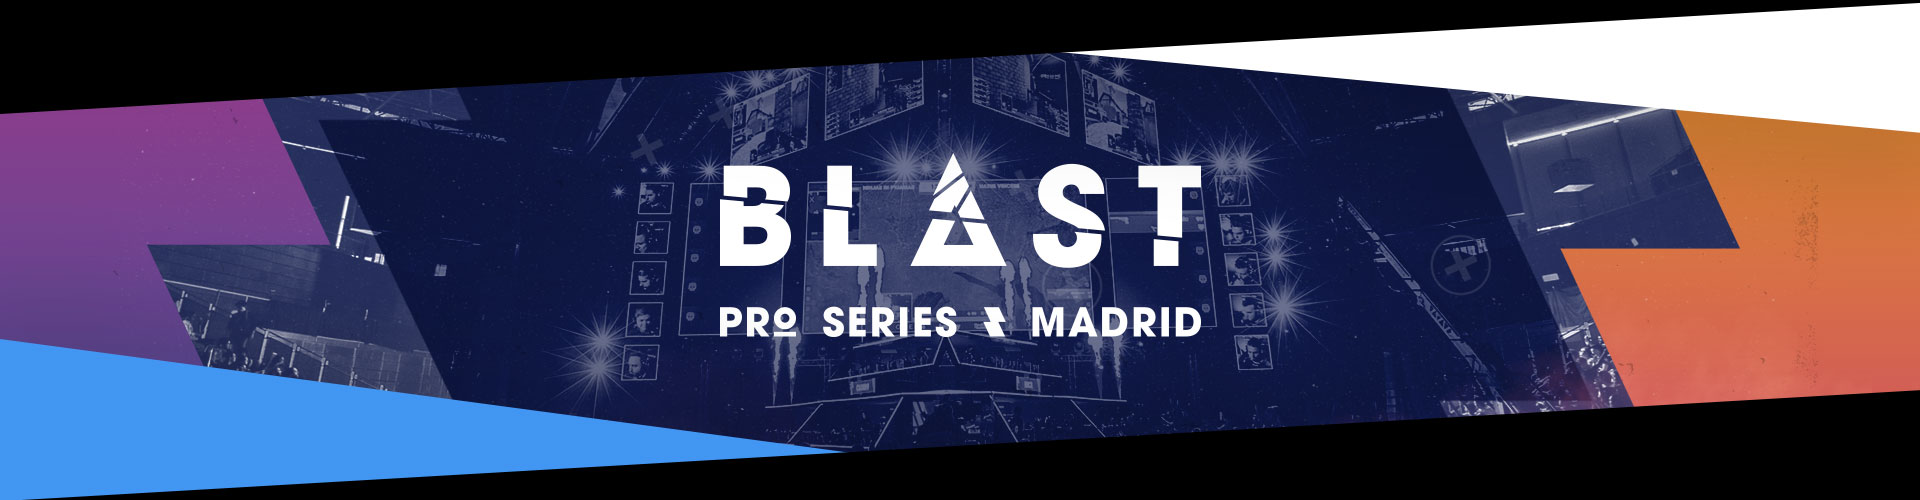 Counter-Strike: Global Offensive - Blast Pro Series Madrid